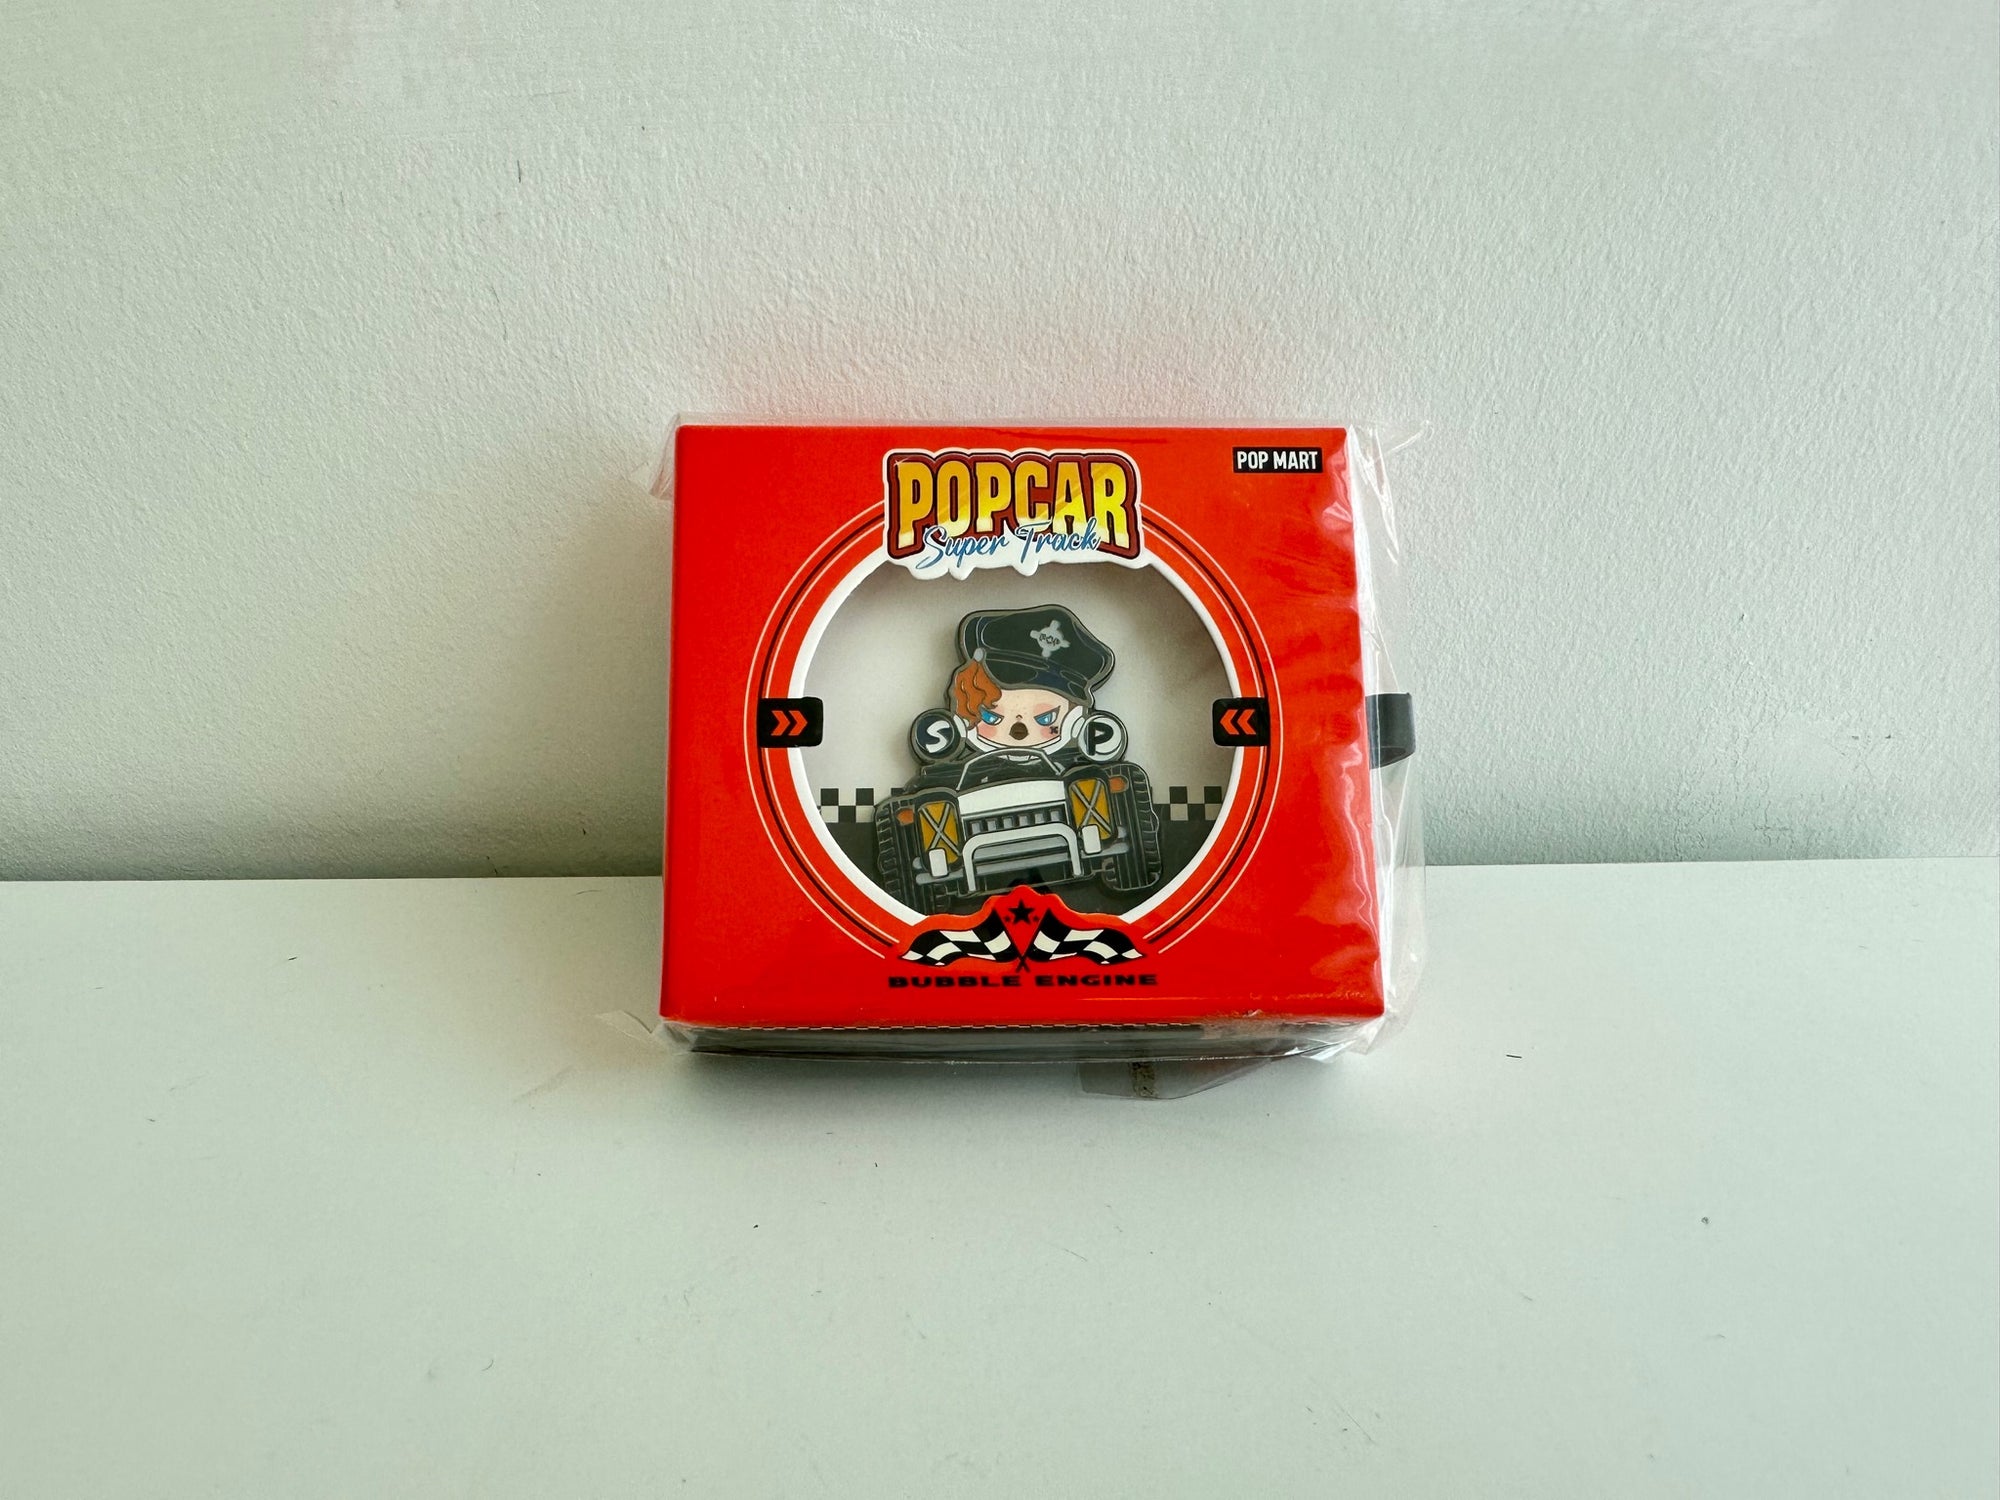 Skullpanda Popcar Super Truck Badge by POP MART - 1